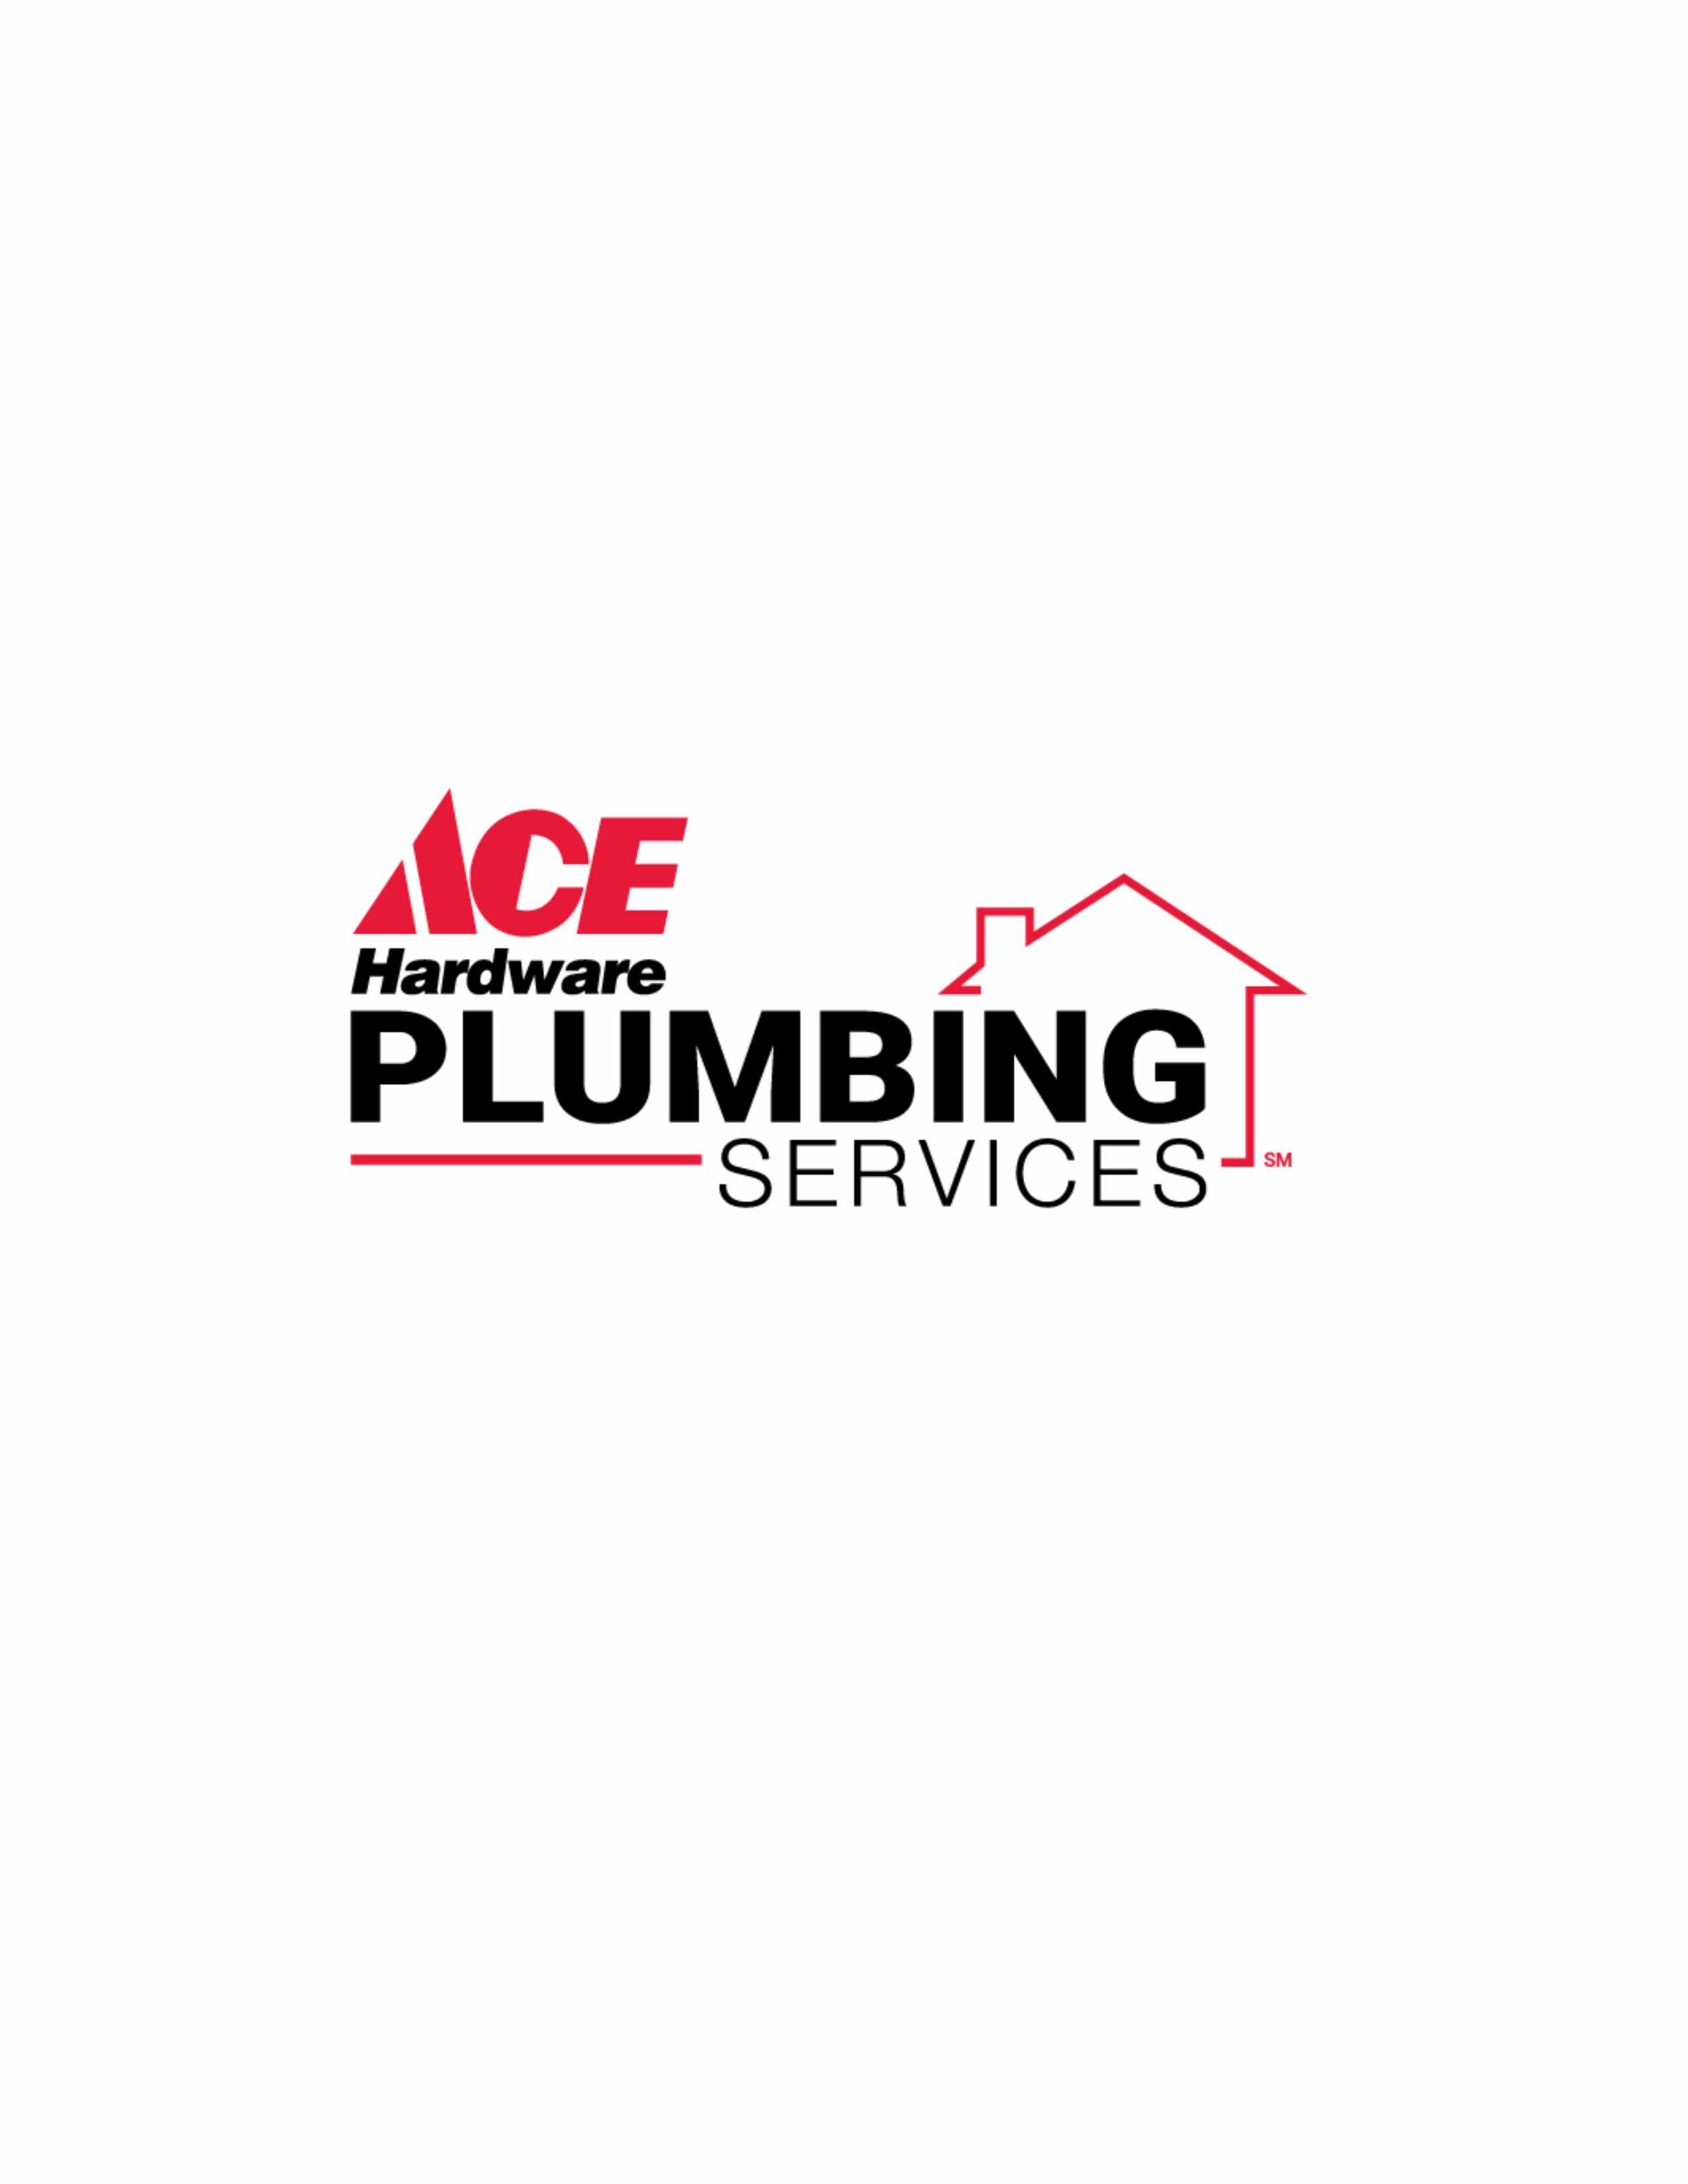 Ace Hardware Plumbing Services Logo